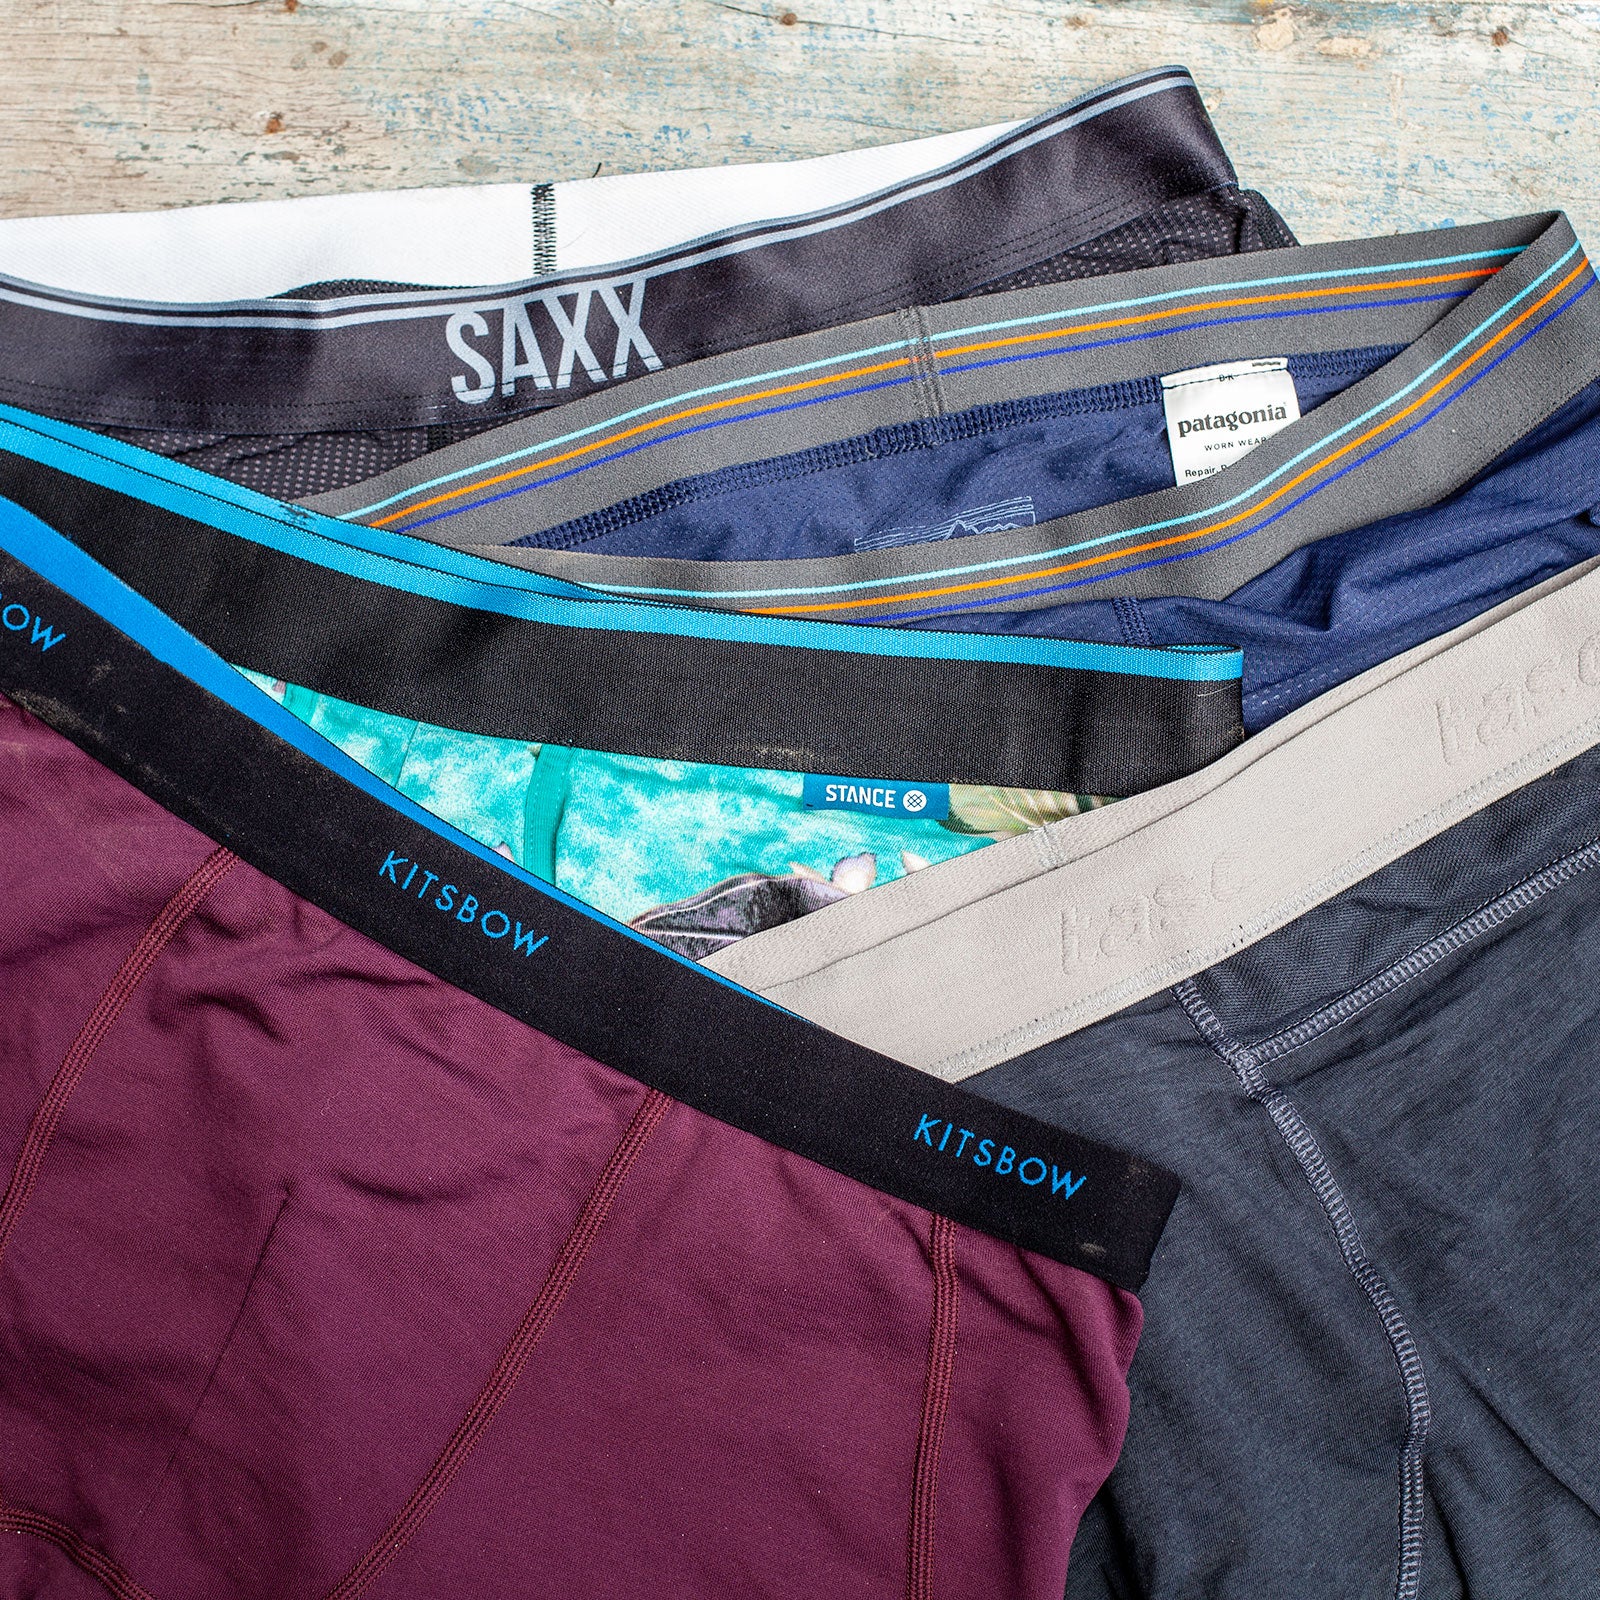 SAXX Underwear scores significant investment